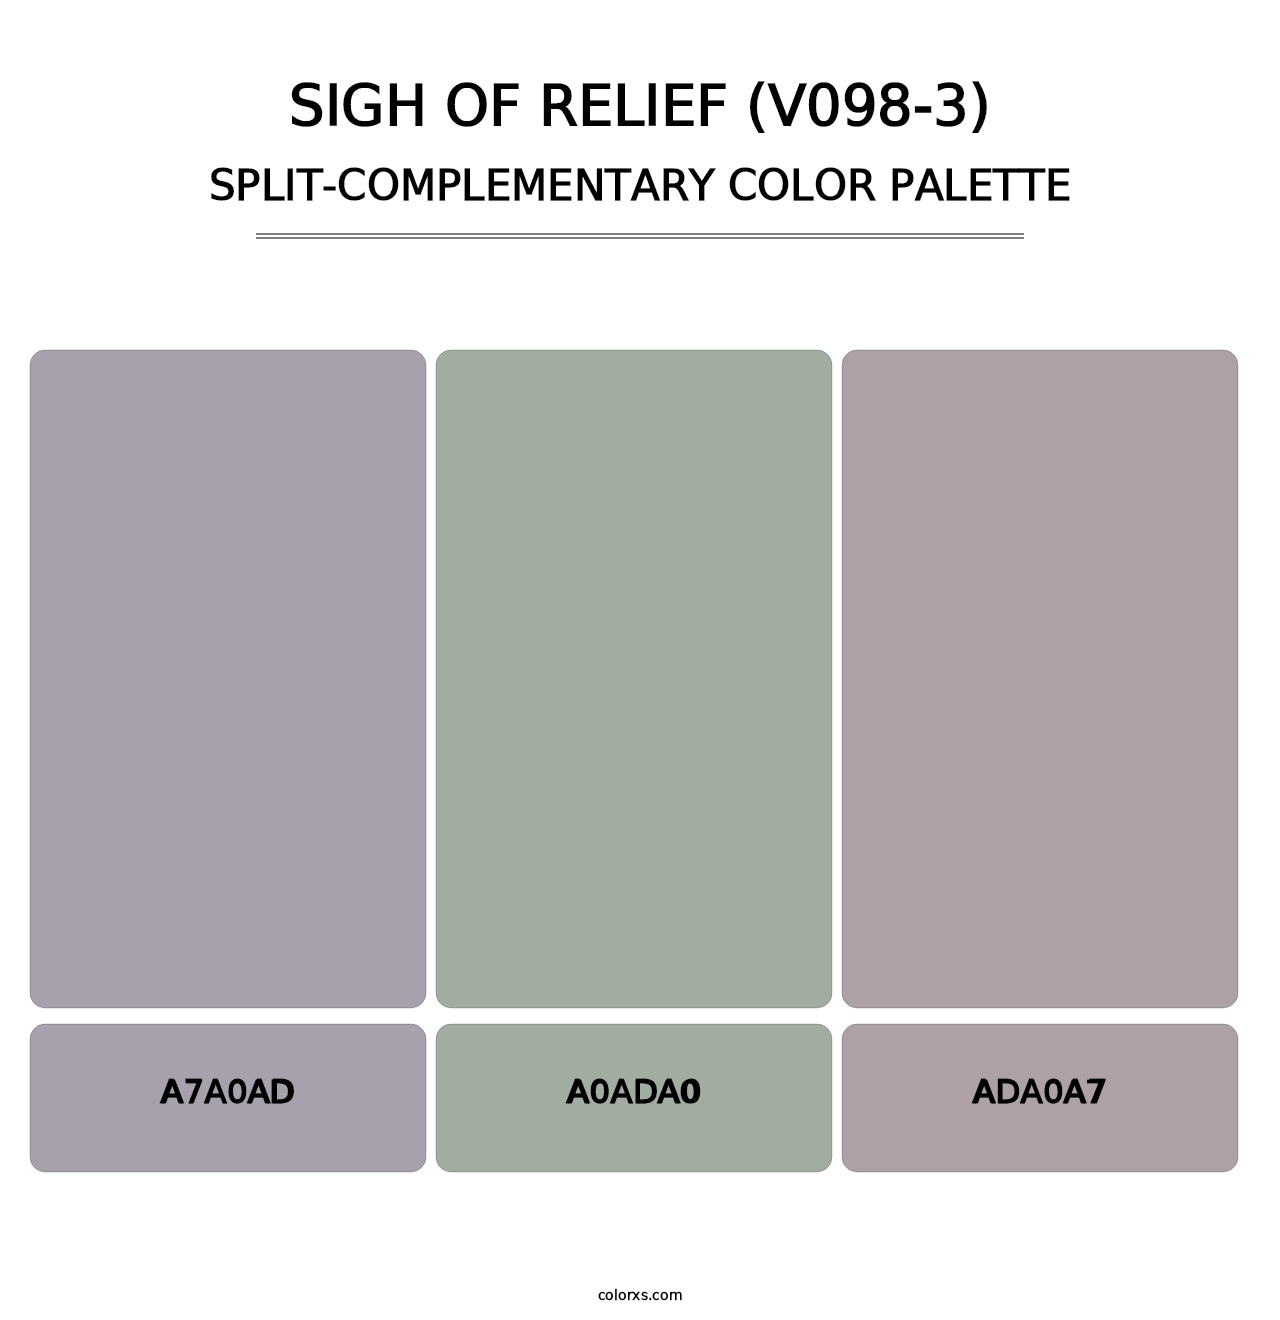 Sigh of Relief (V098-3) - Split-Complementary Color Palette